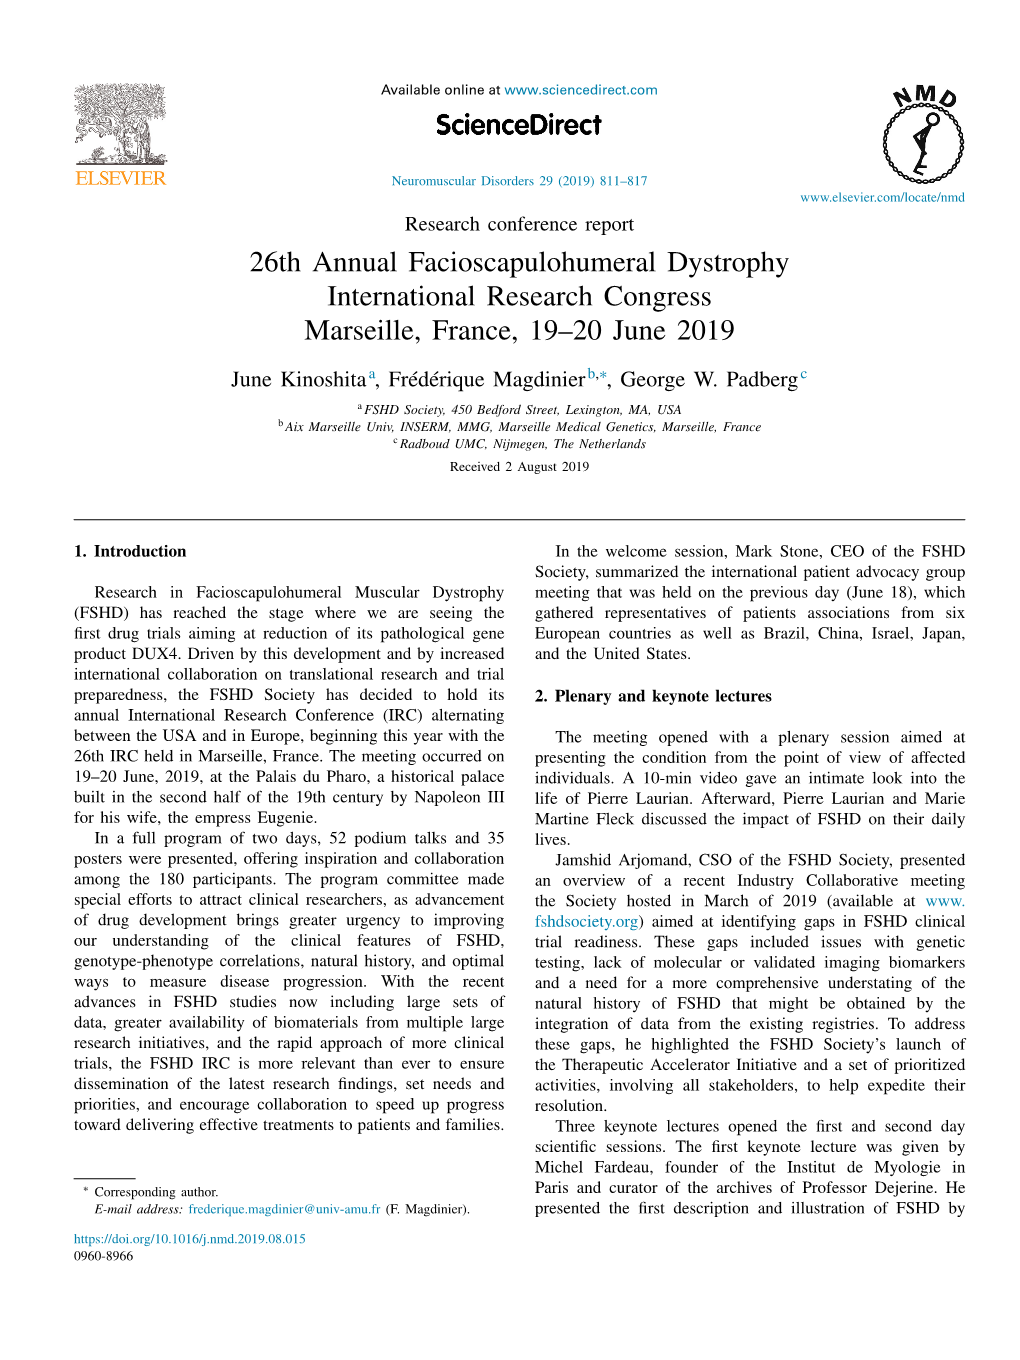 Neuromuscular Disease Journal Article on IRC 2019